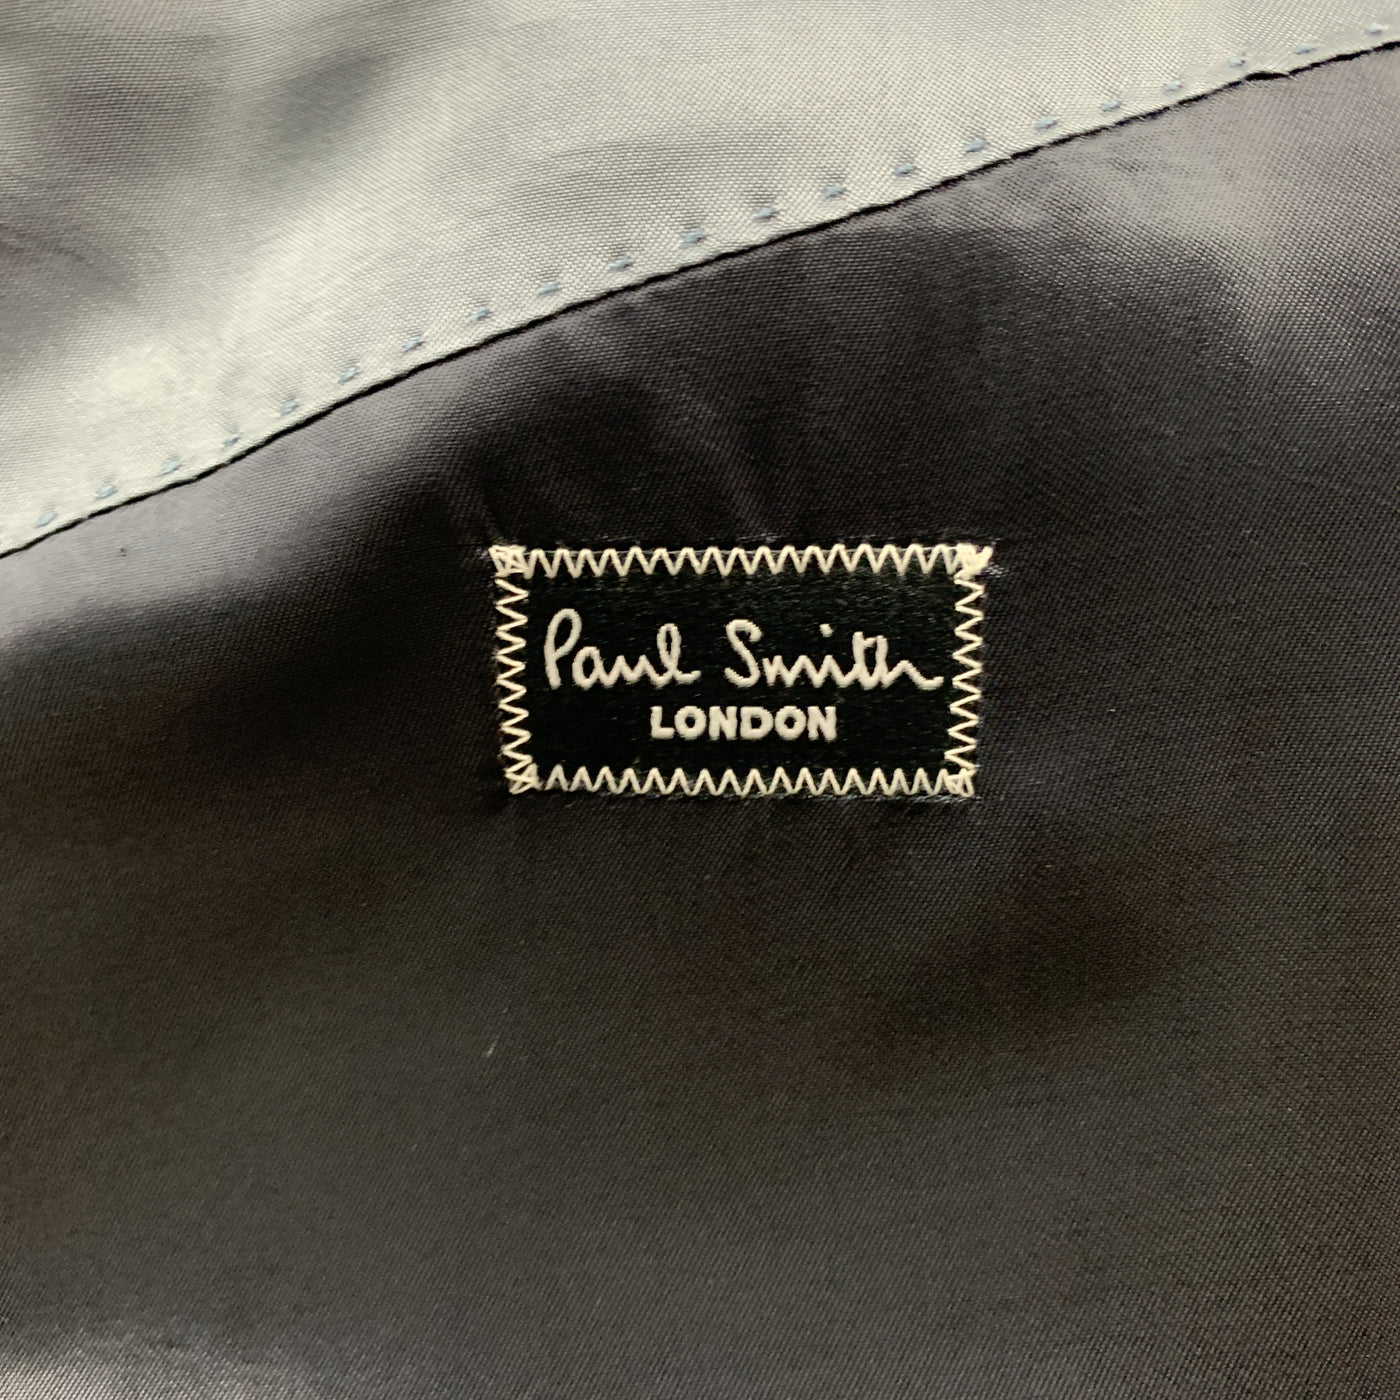 PAUL SMITH Chest Size 44 Woven Navy Cotton / Elastane Notch Lapel Sport Coat